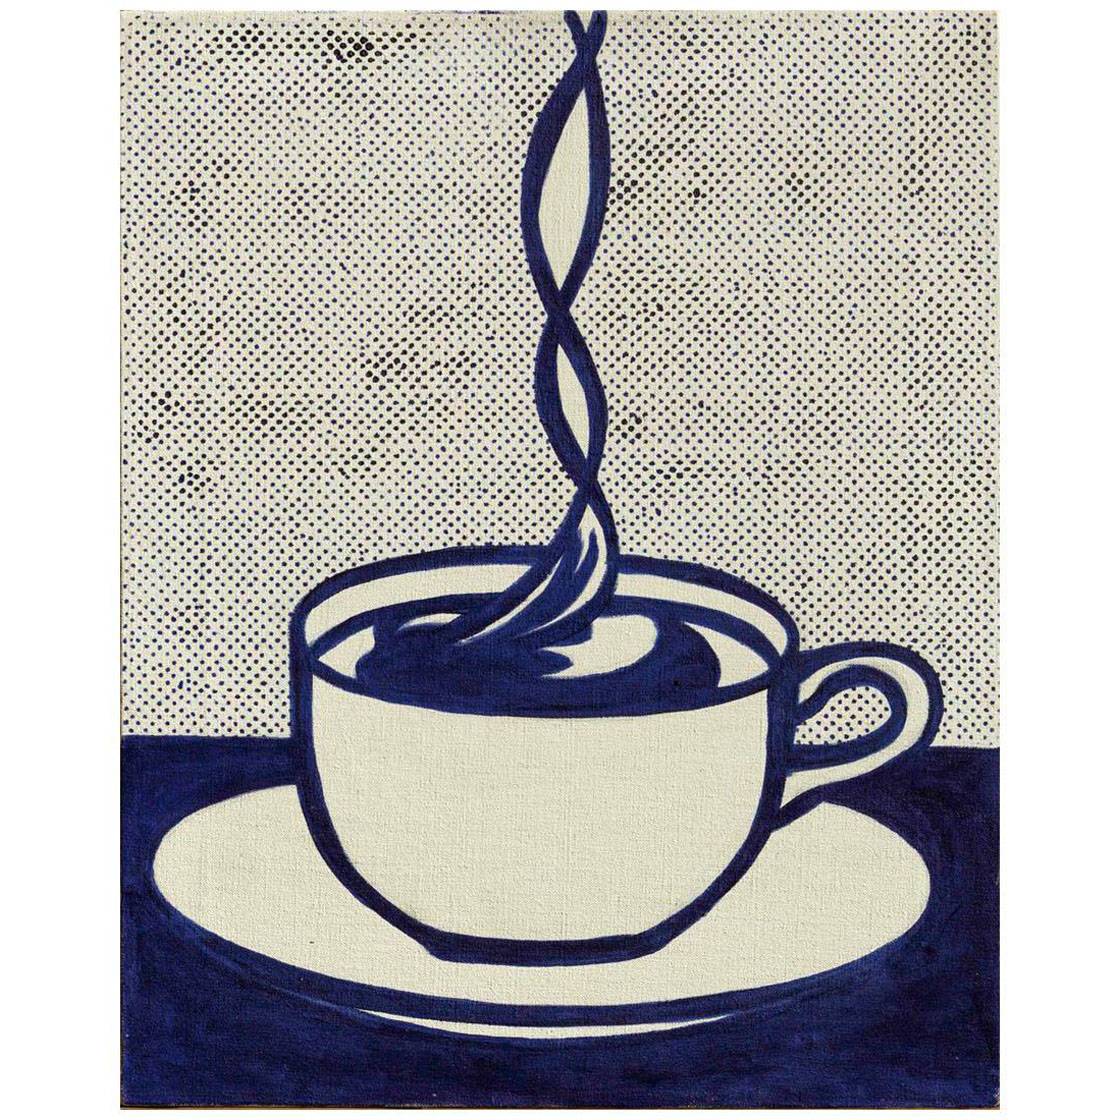 Roy Lichtenstein. Cup of Coffee. 1961. Christies 2013/06/05 sold GBP 2 805 875